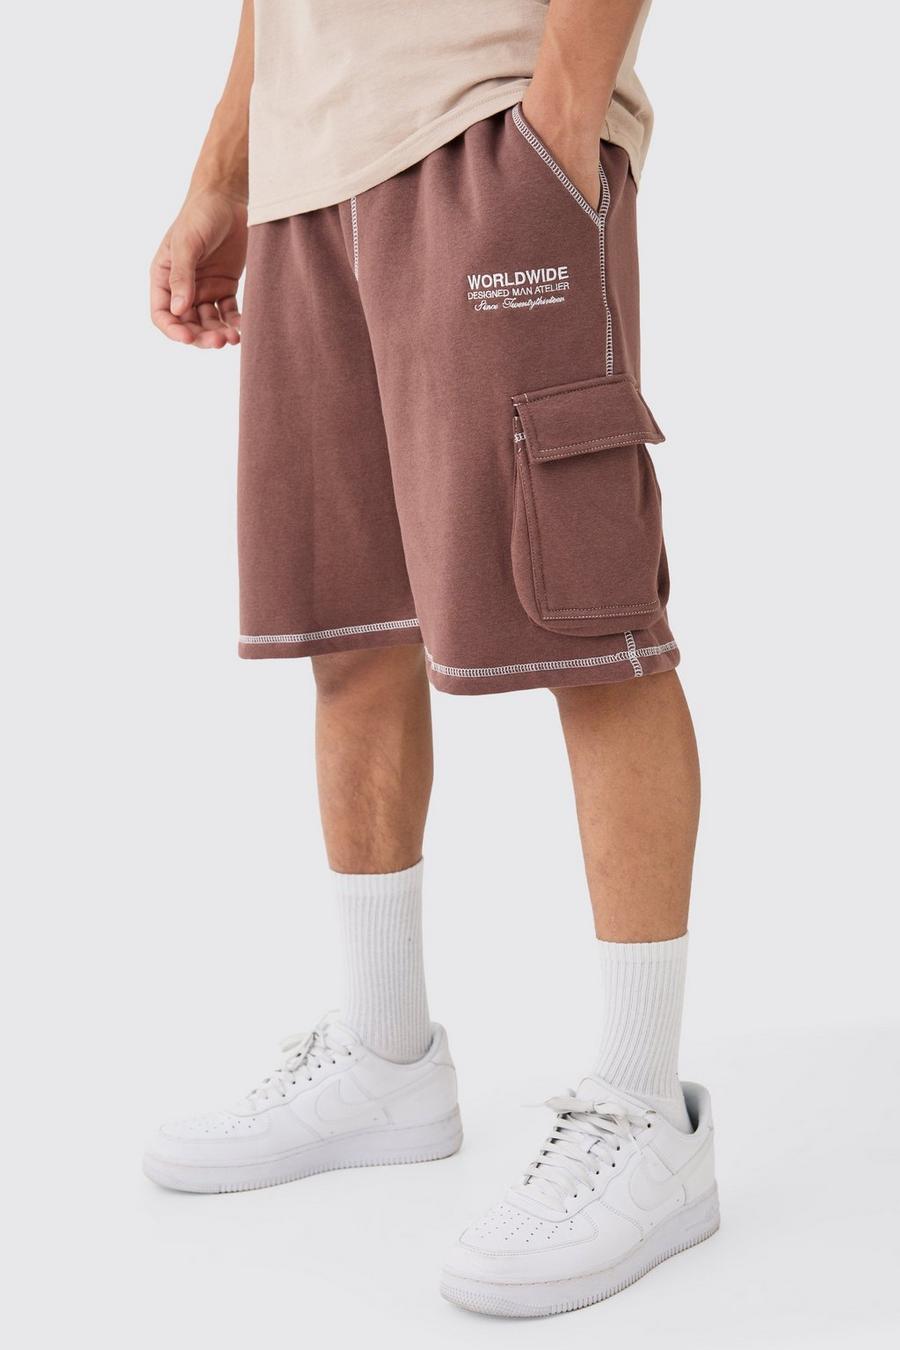 Lockere Worldwide Cargo-Shorts mit Kontrast-Naht, Chocolate